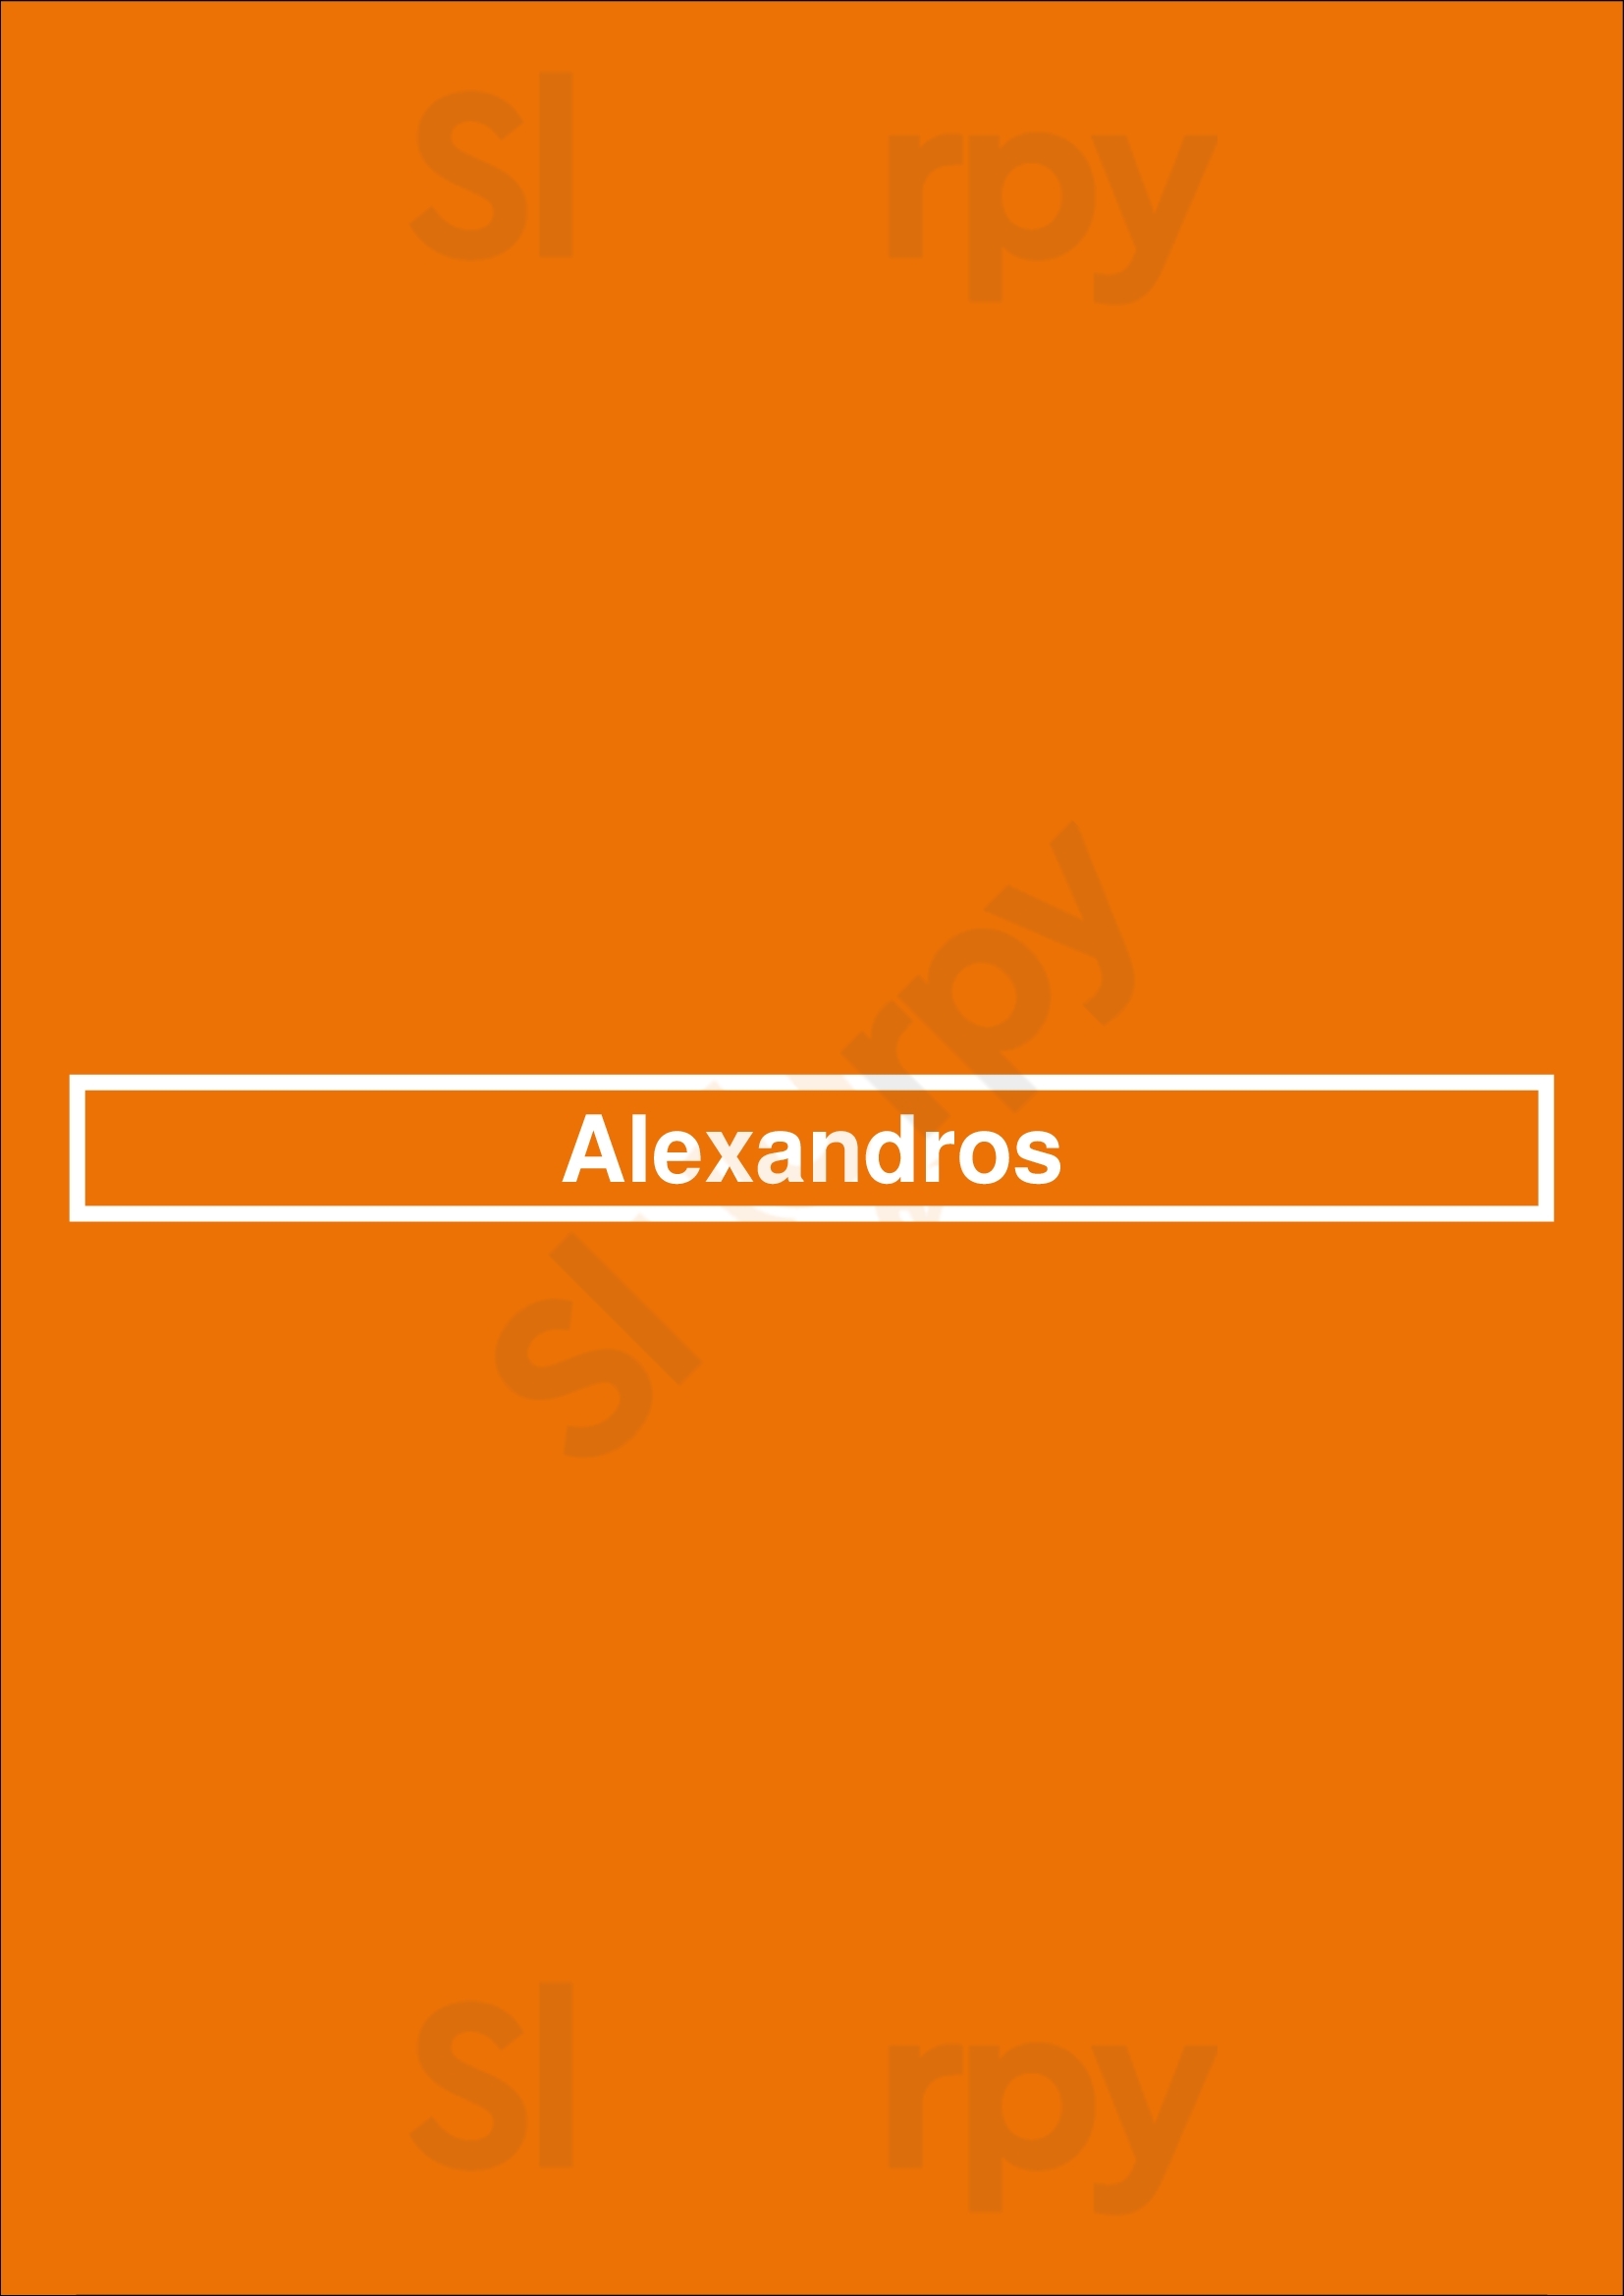 Alexandros Amstelveen Menu - 1